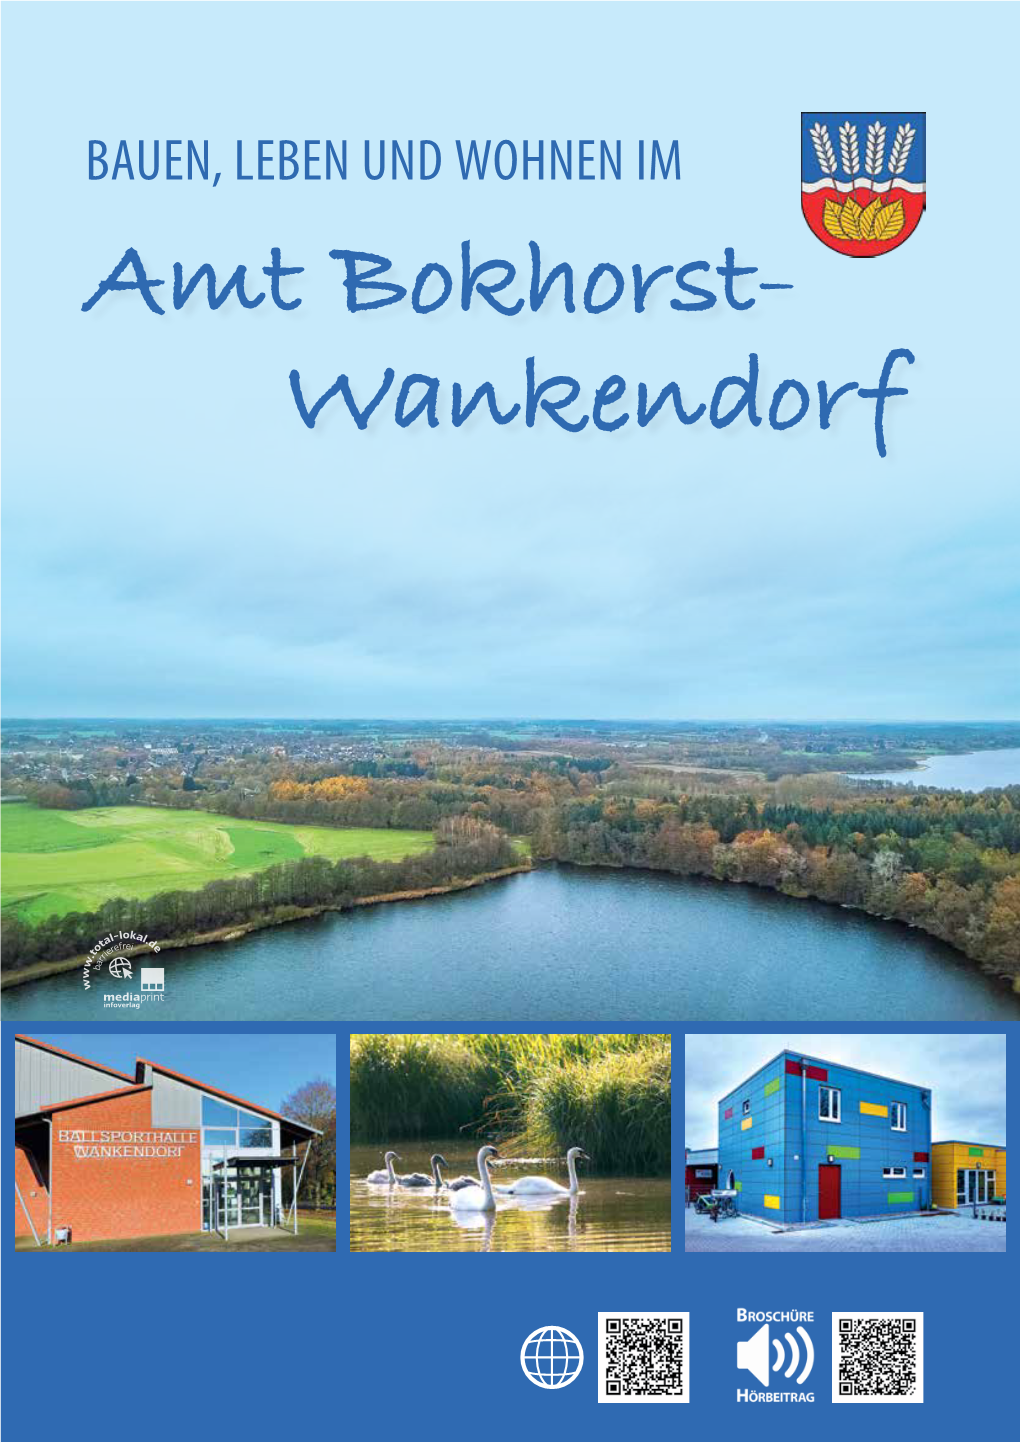 Amt Bokhorst-Wankendorf